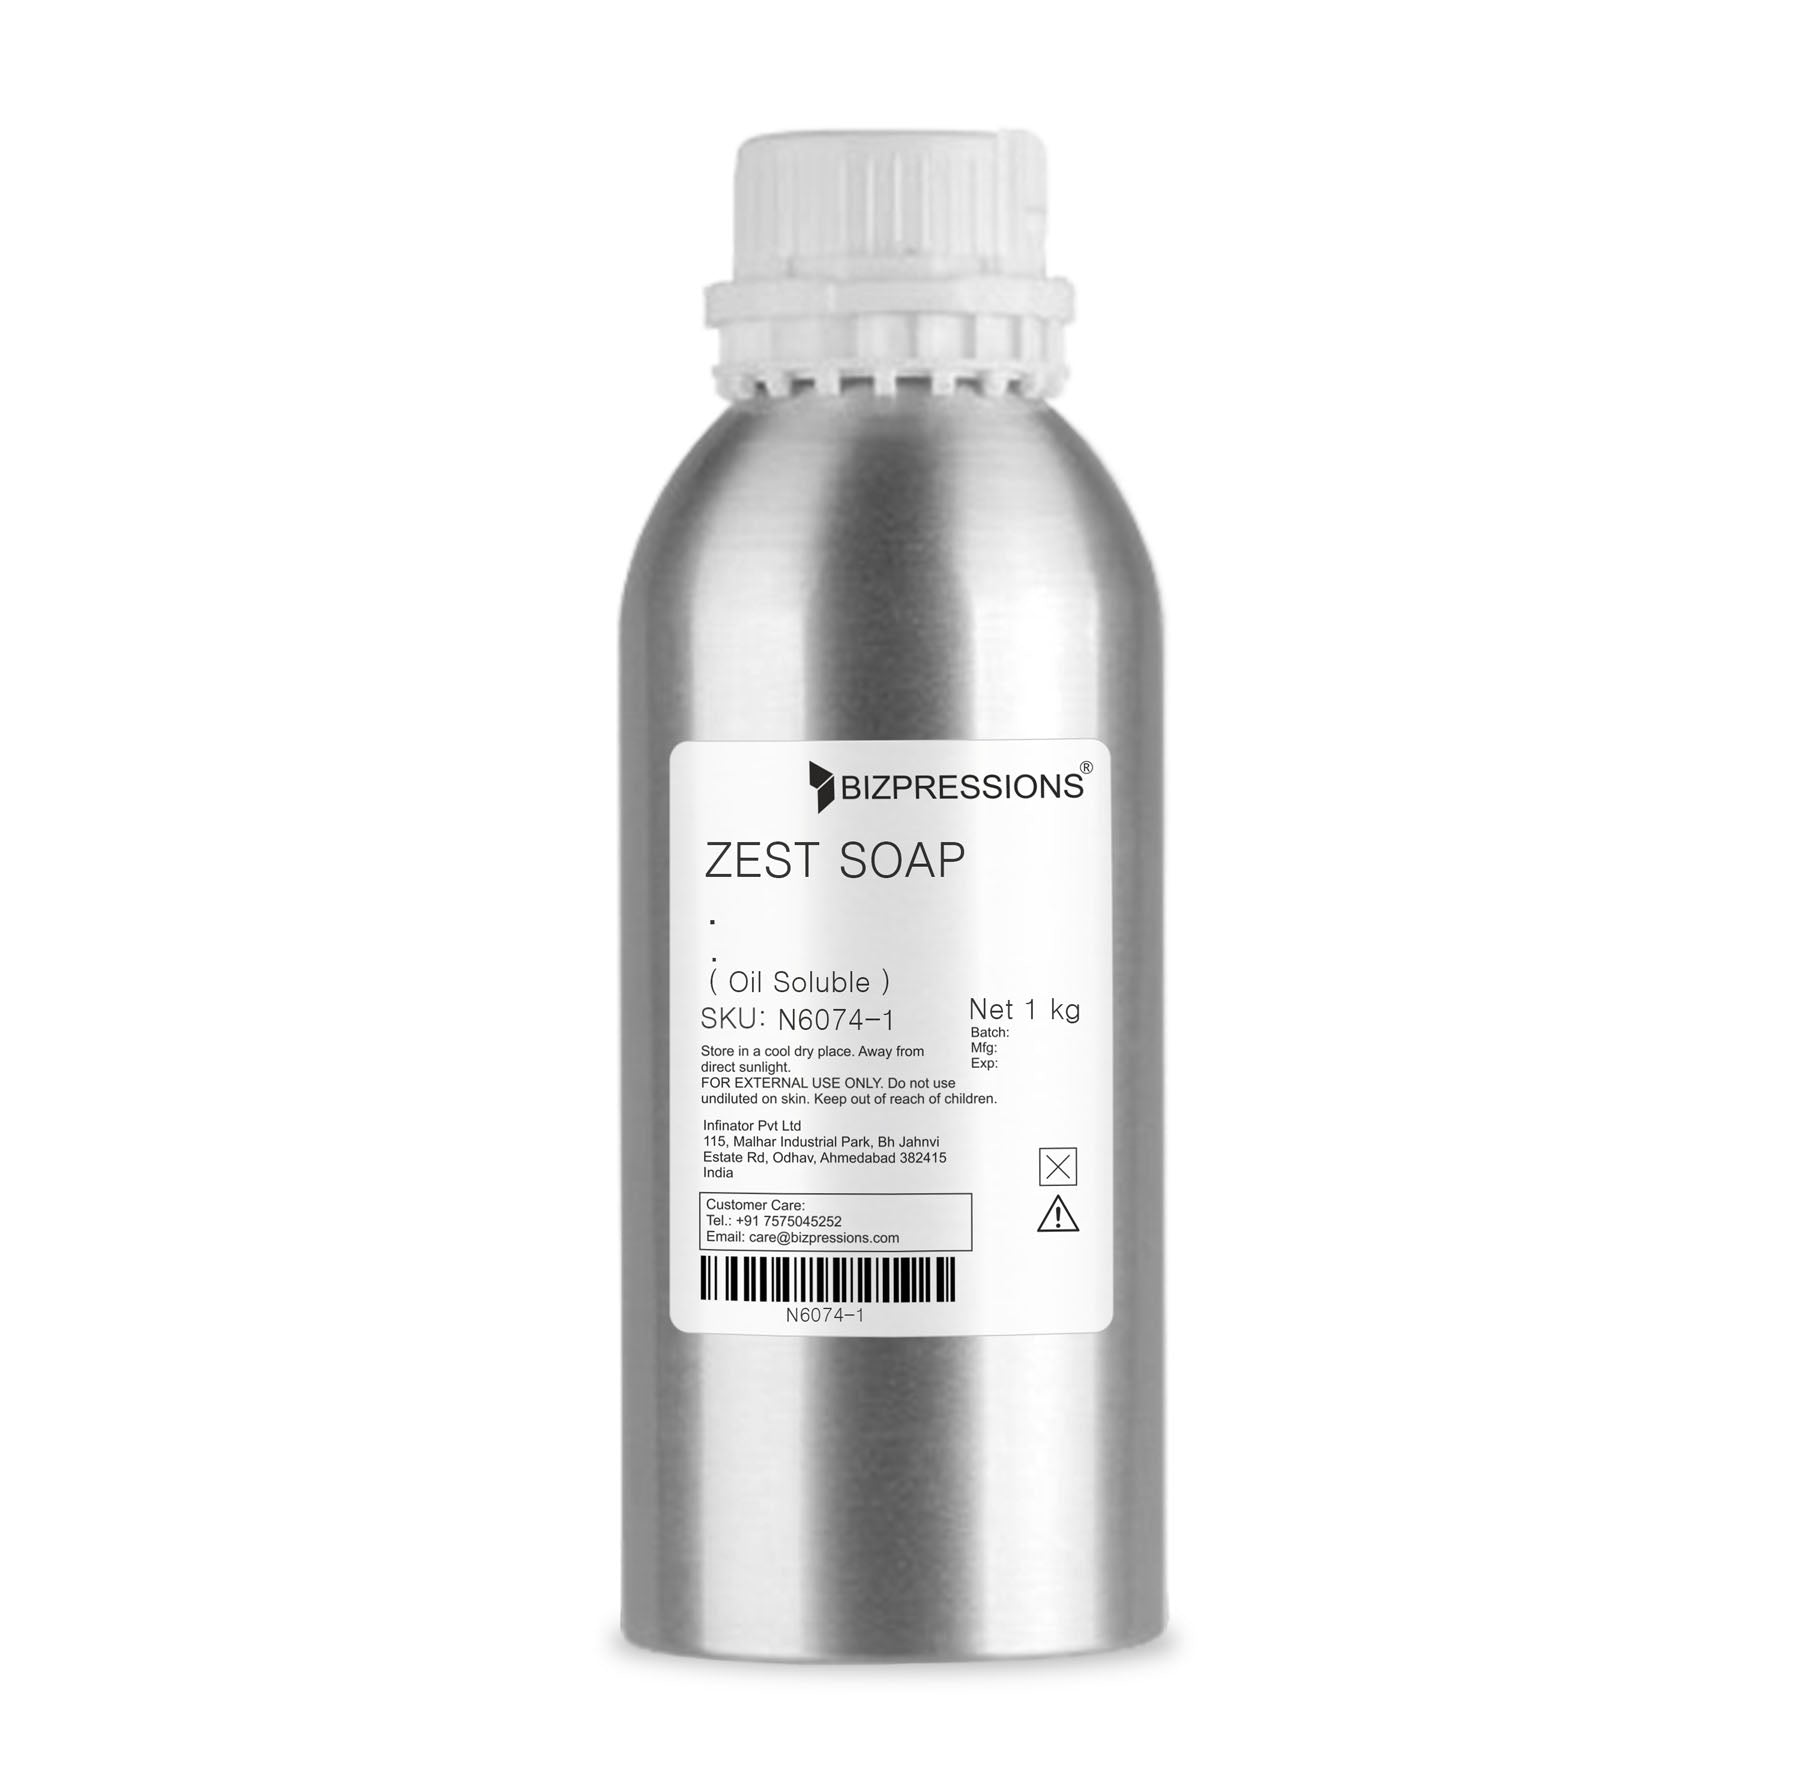 ZEST SOAP - Fragrance ( Oil Soluble ) - 1 kg